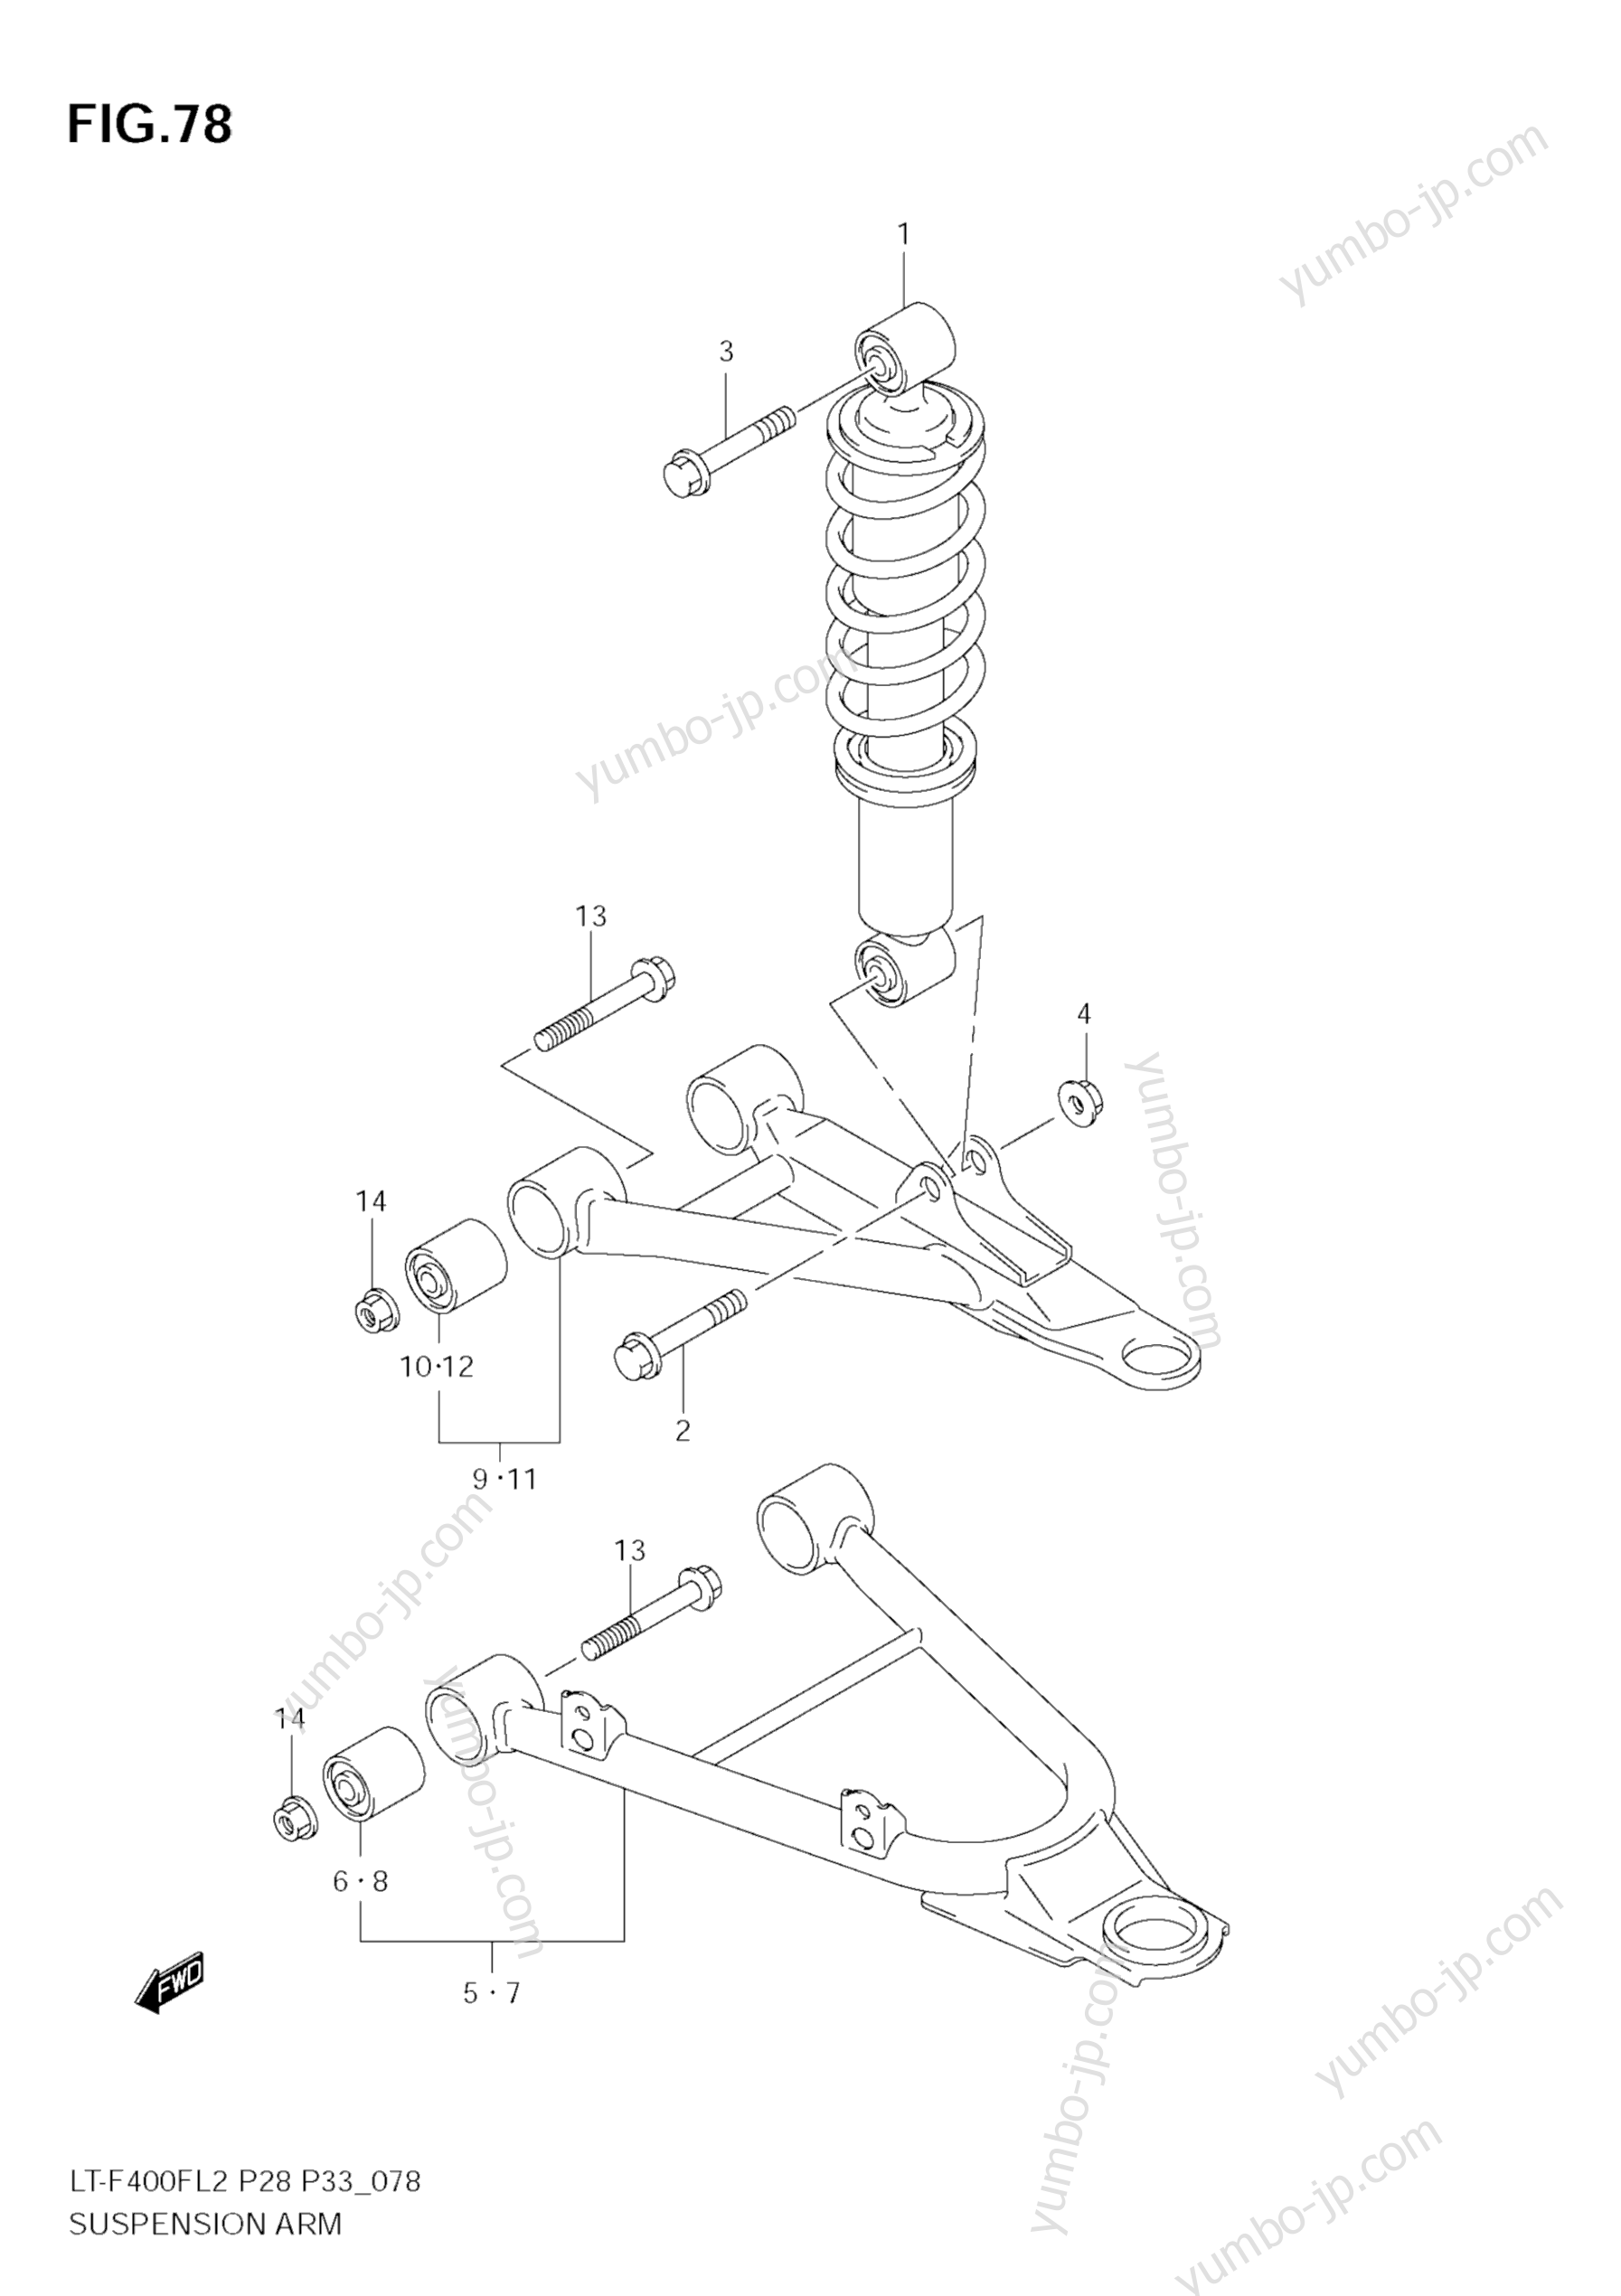 SUSPENSION ARM for ATVs SUZUKI KingQuad (LT-F400FZ) 2012 year